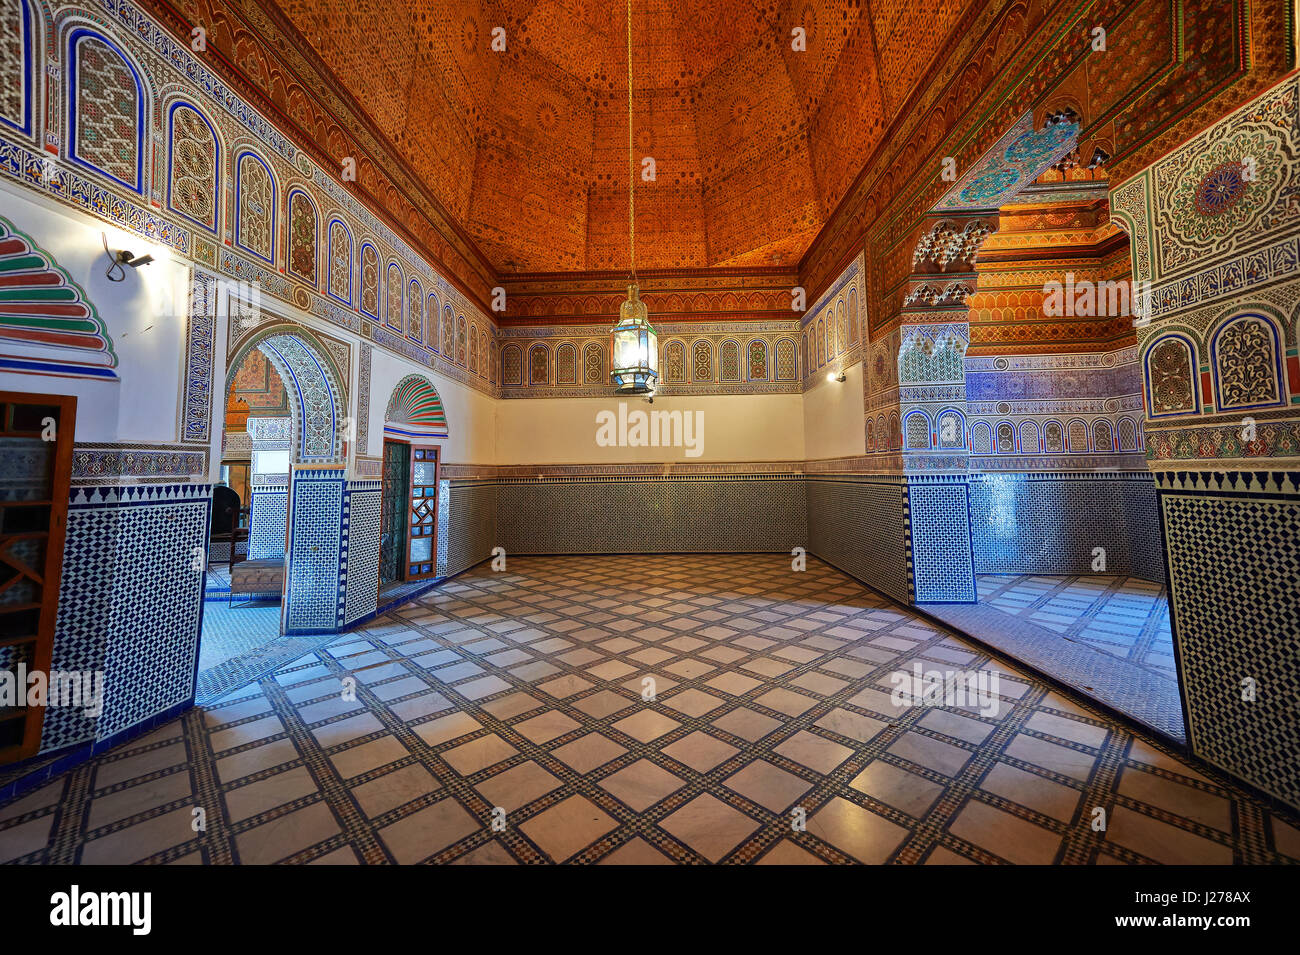 El bereber arabesco decorativo interior de Bou Ahmed el harén. Palacio Bahia, Marrakech, Marruecos Foto de stock